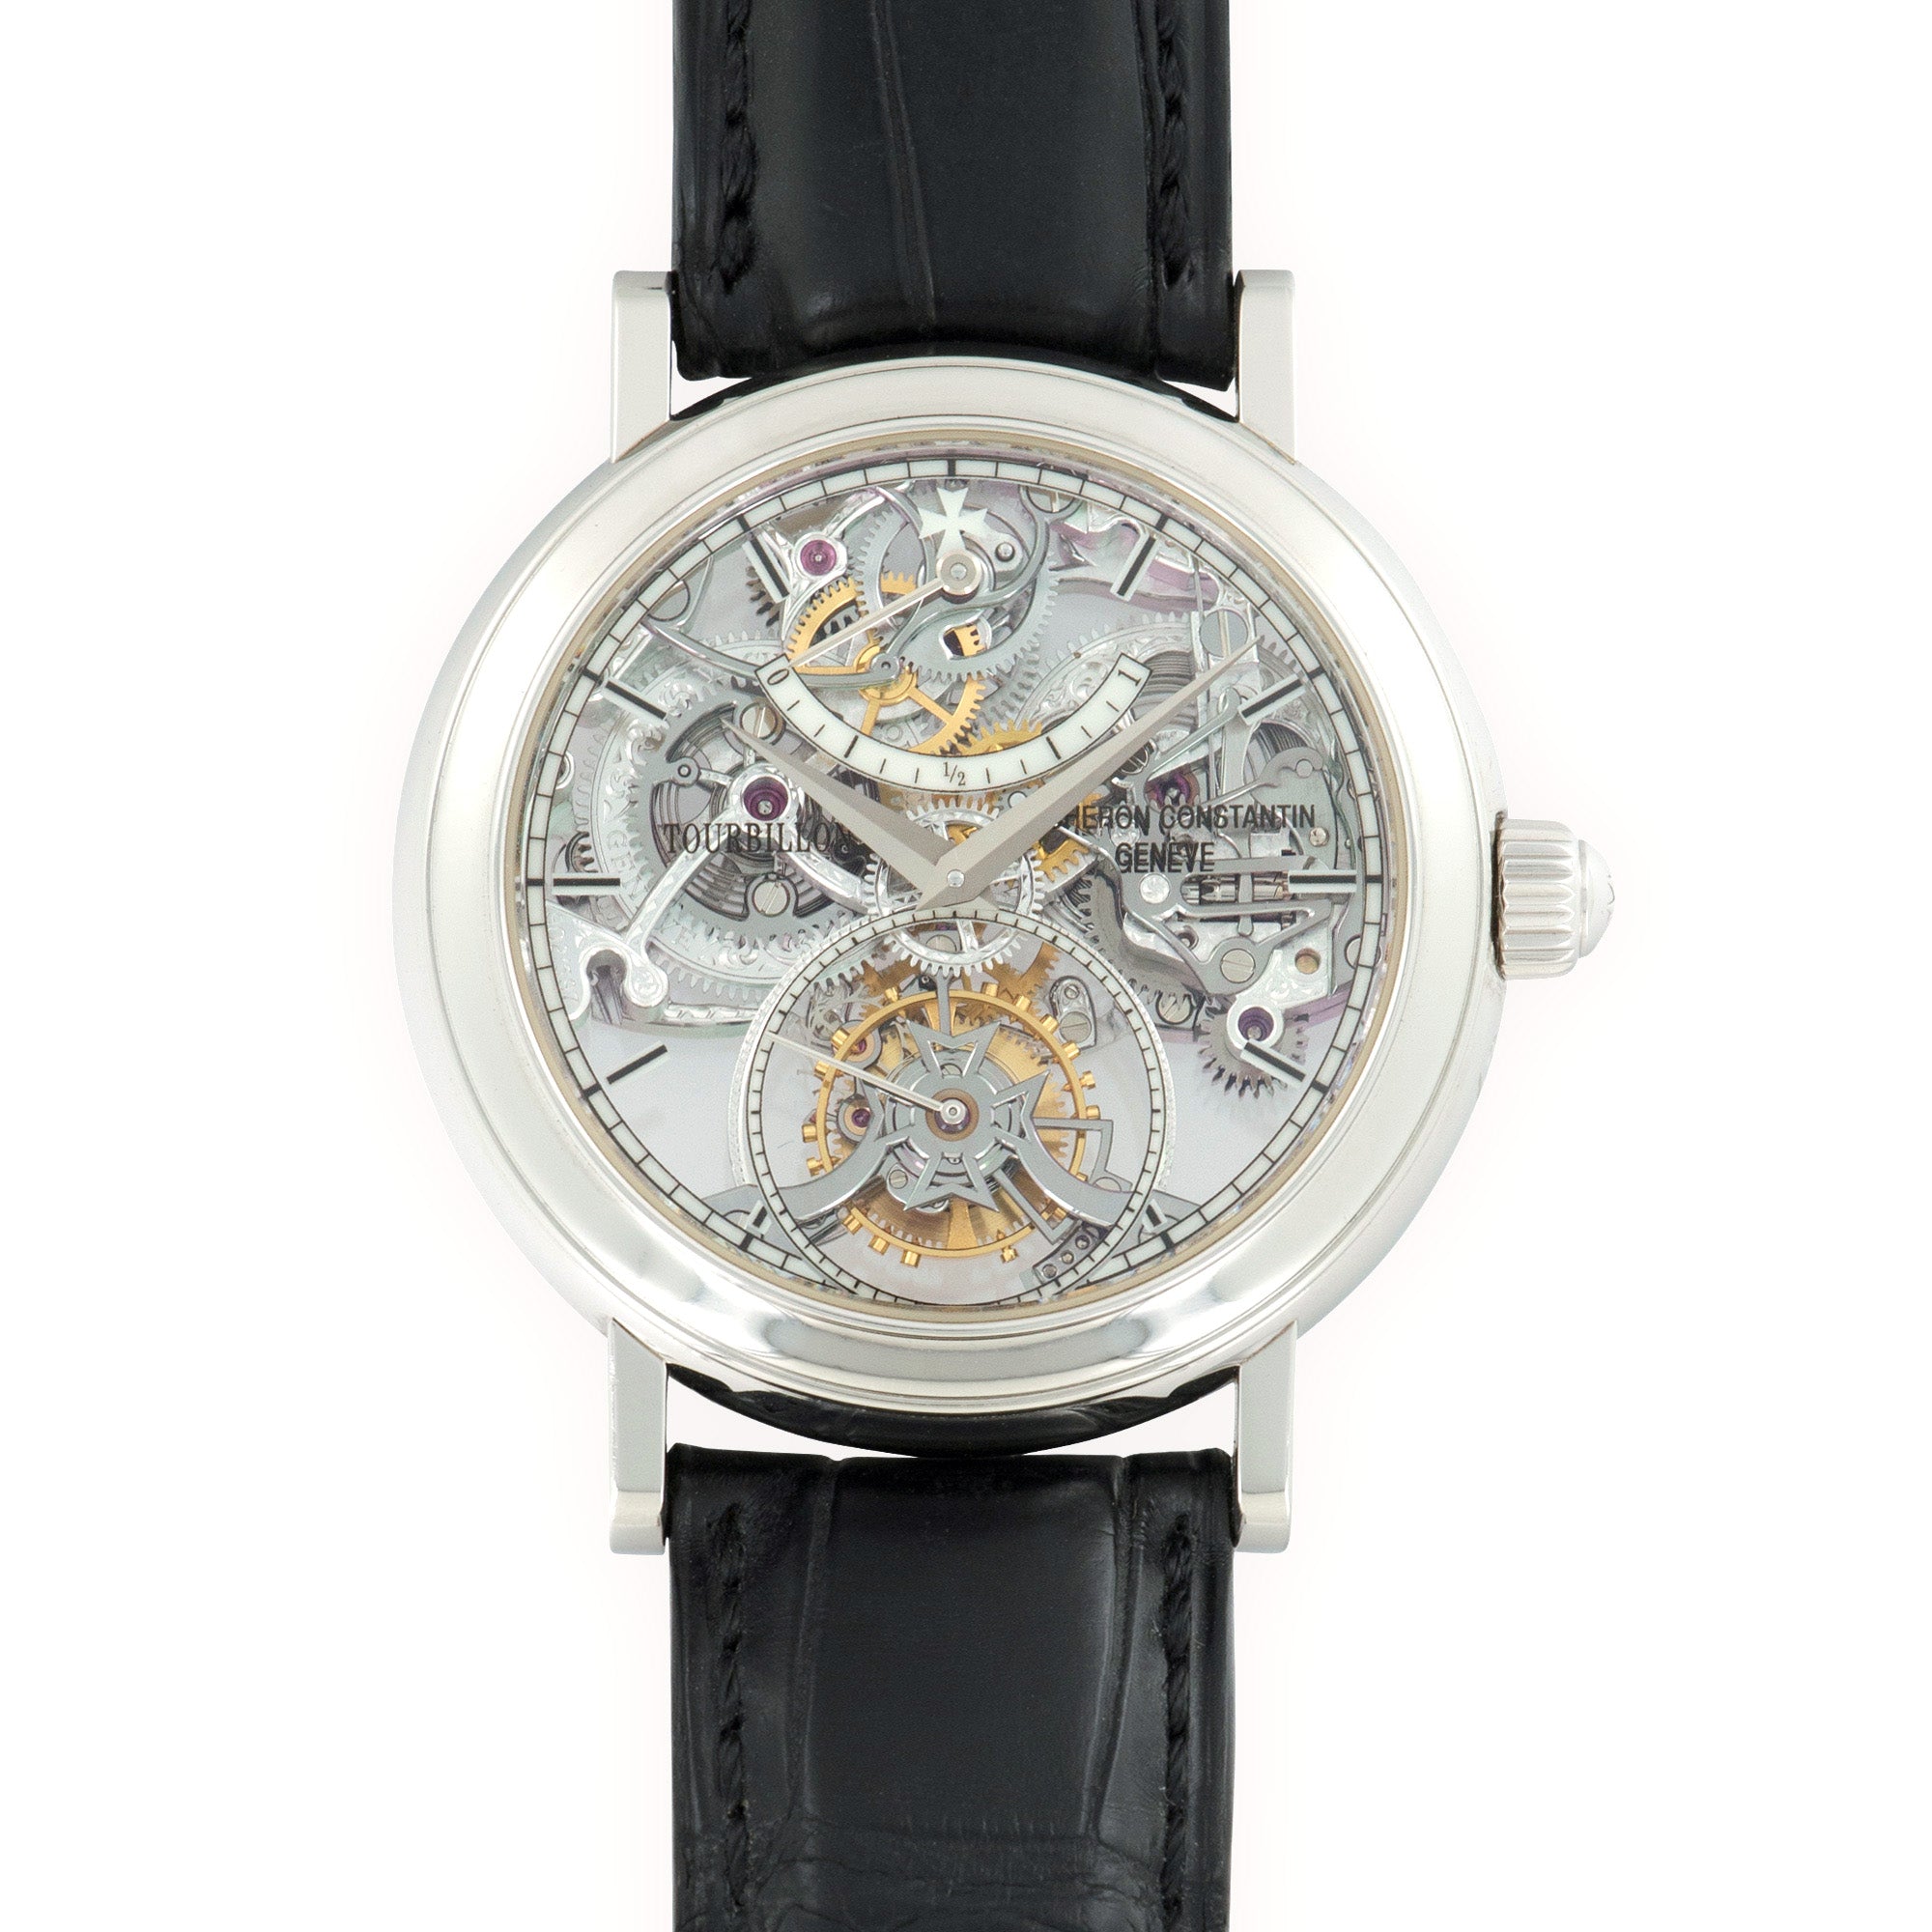 Vacheron Constantin - Vacheron Constantin Platinum Skeletonized Tourbillon Watch - The Keystone Watches